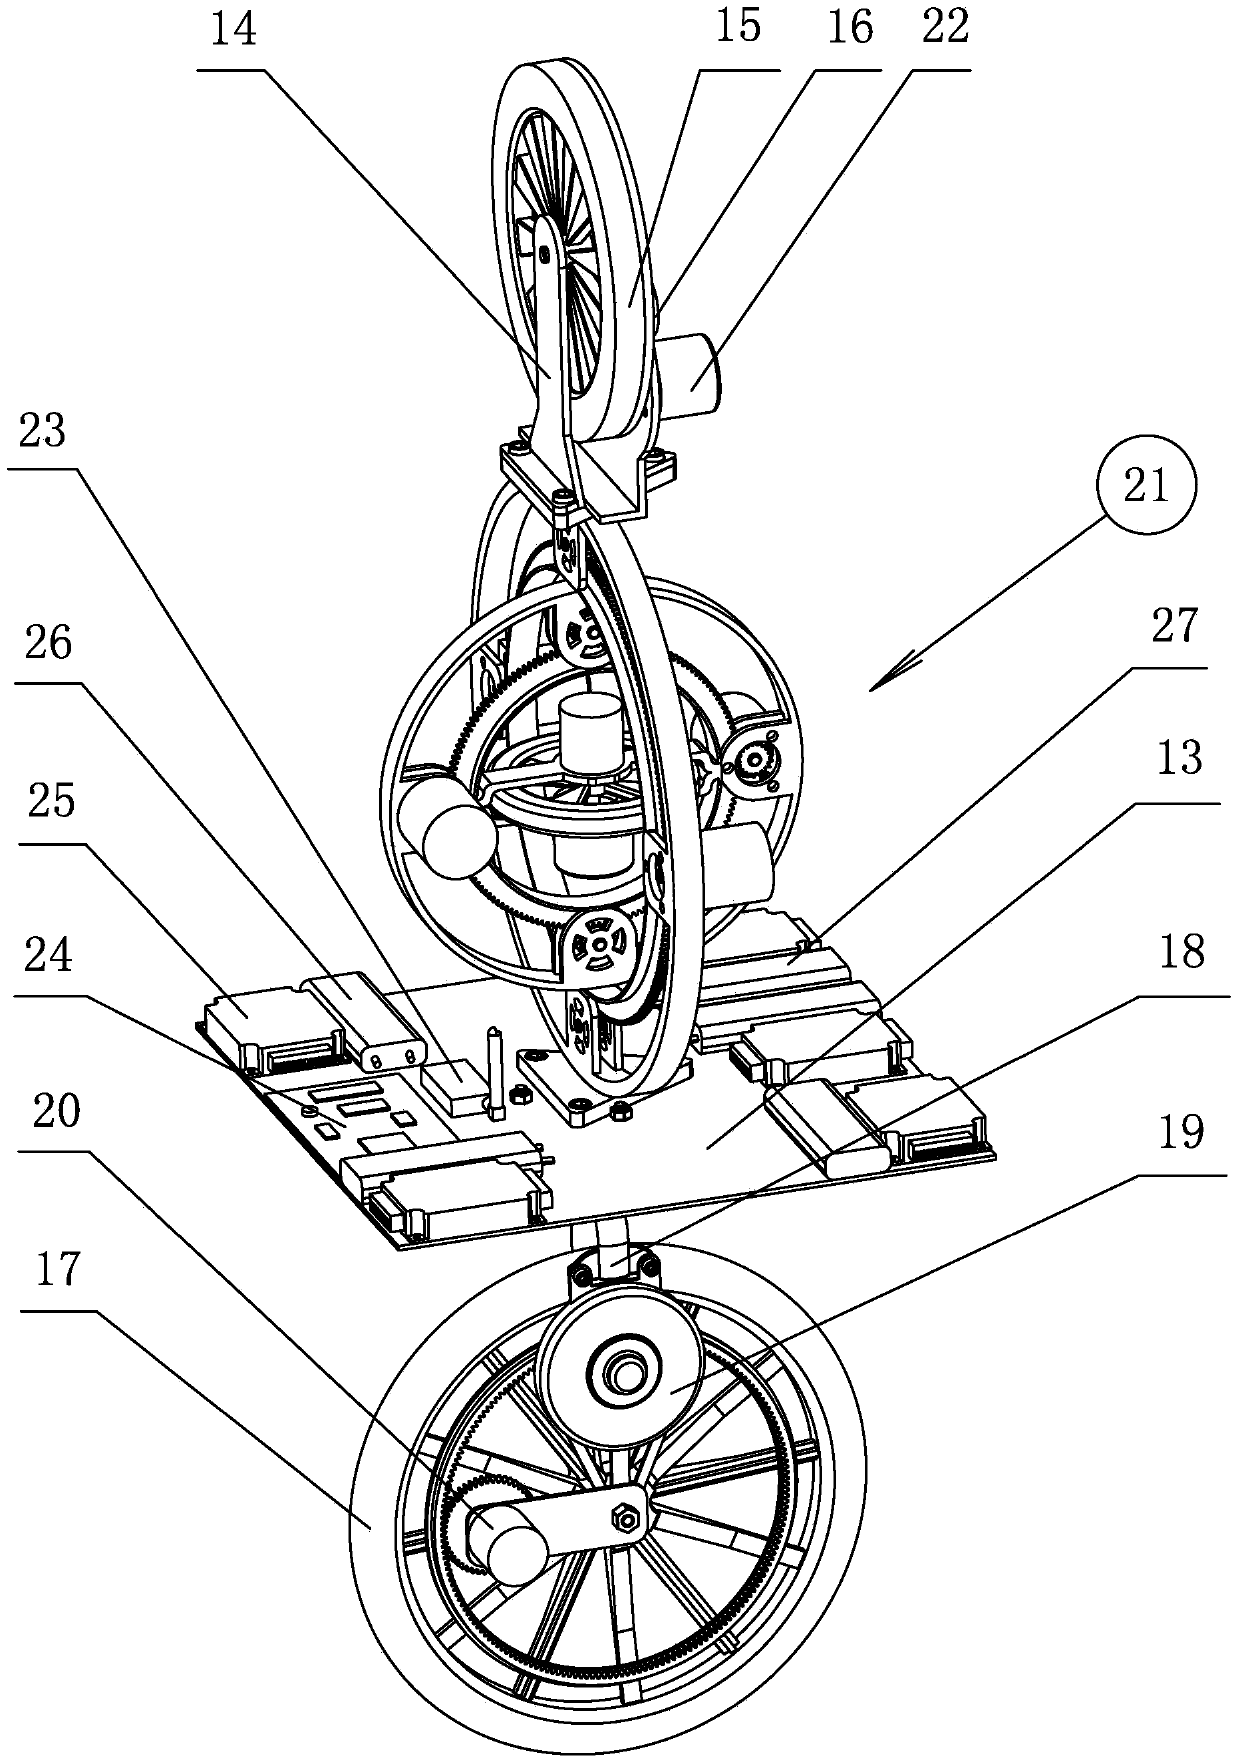 Self-balancing gyroscopic unicycle robot system